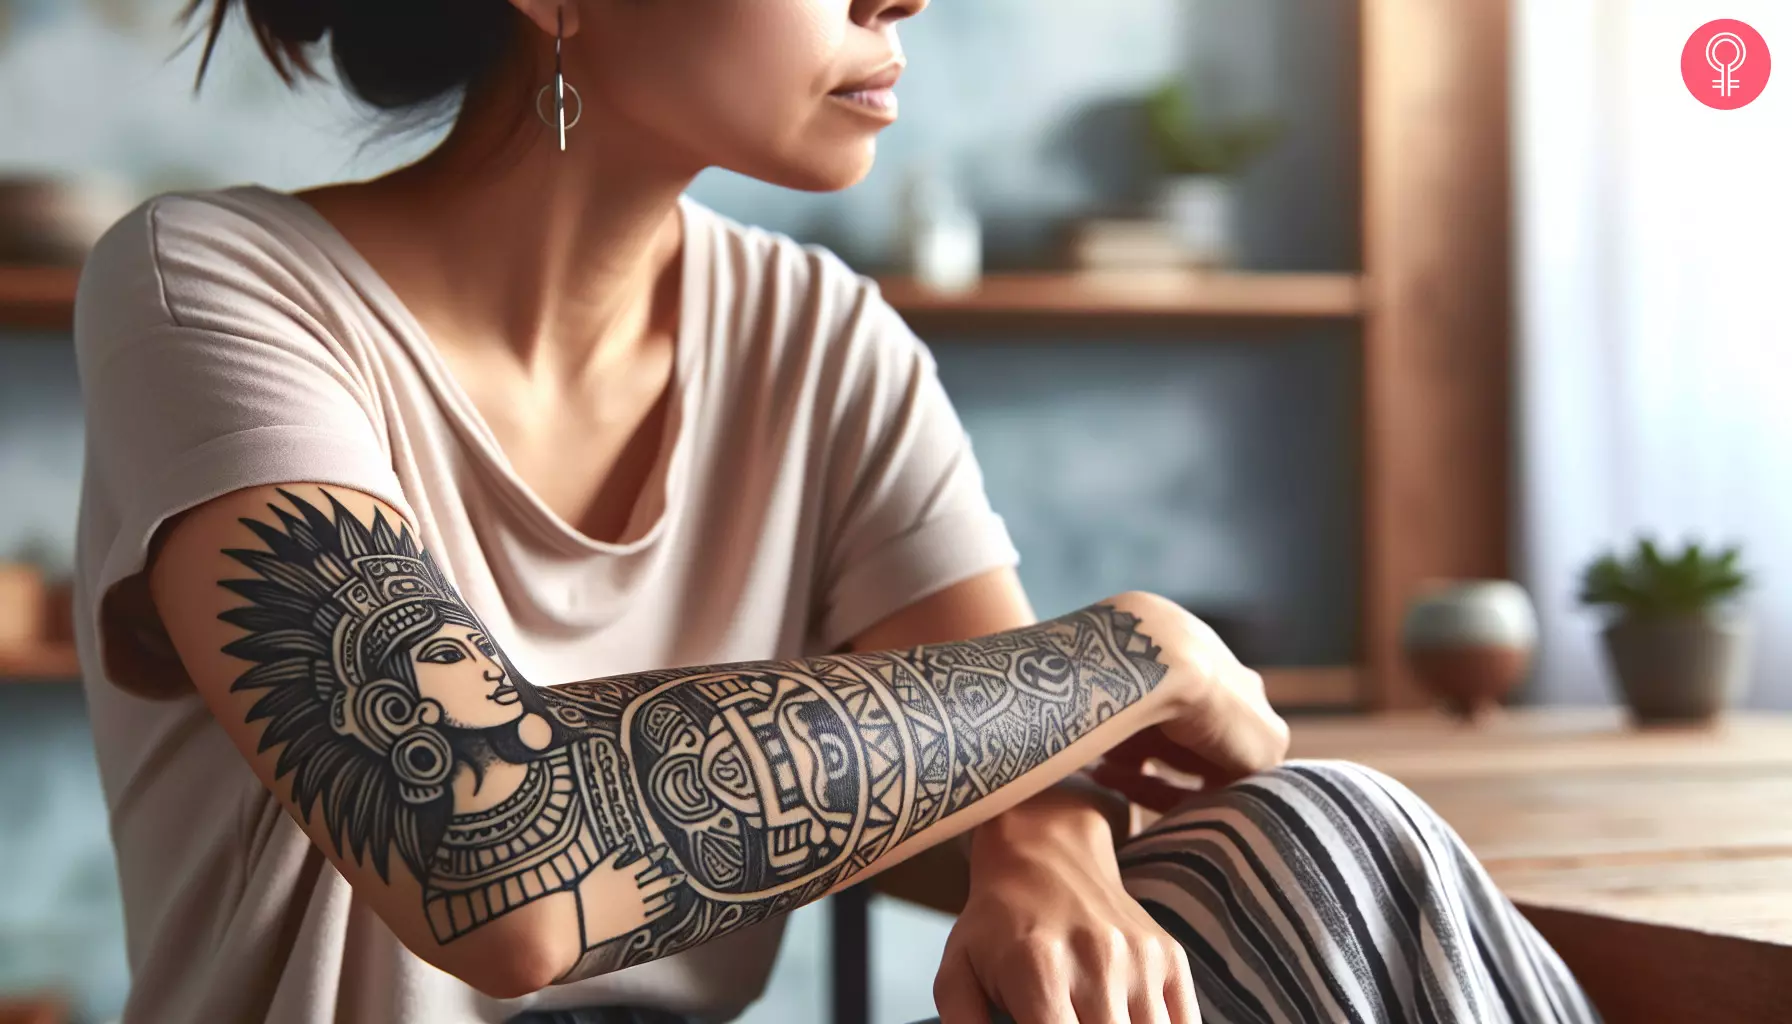 A female Mayan warrior tattoo on a woman’s arm